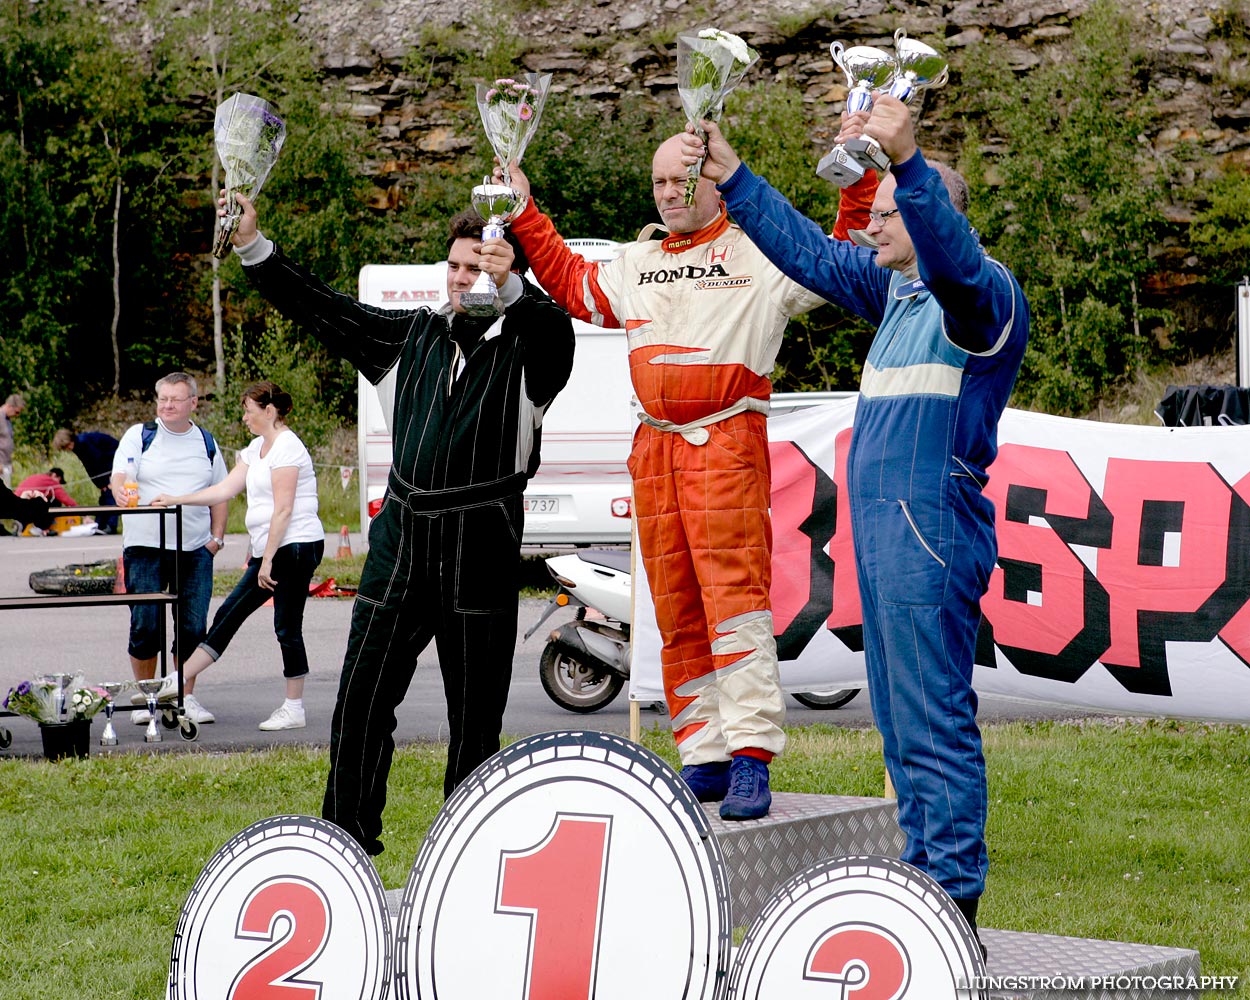 SSK Raceweek,mix,Kinnekulle Ring,Götene,Sverige,Motorsport,,2009,107553